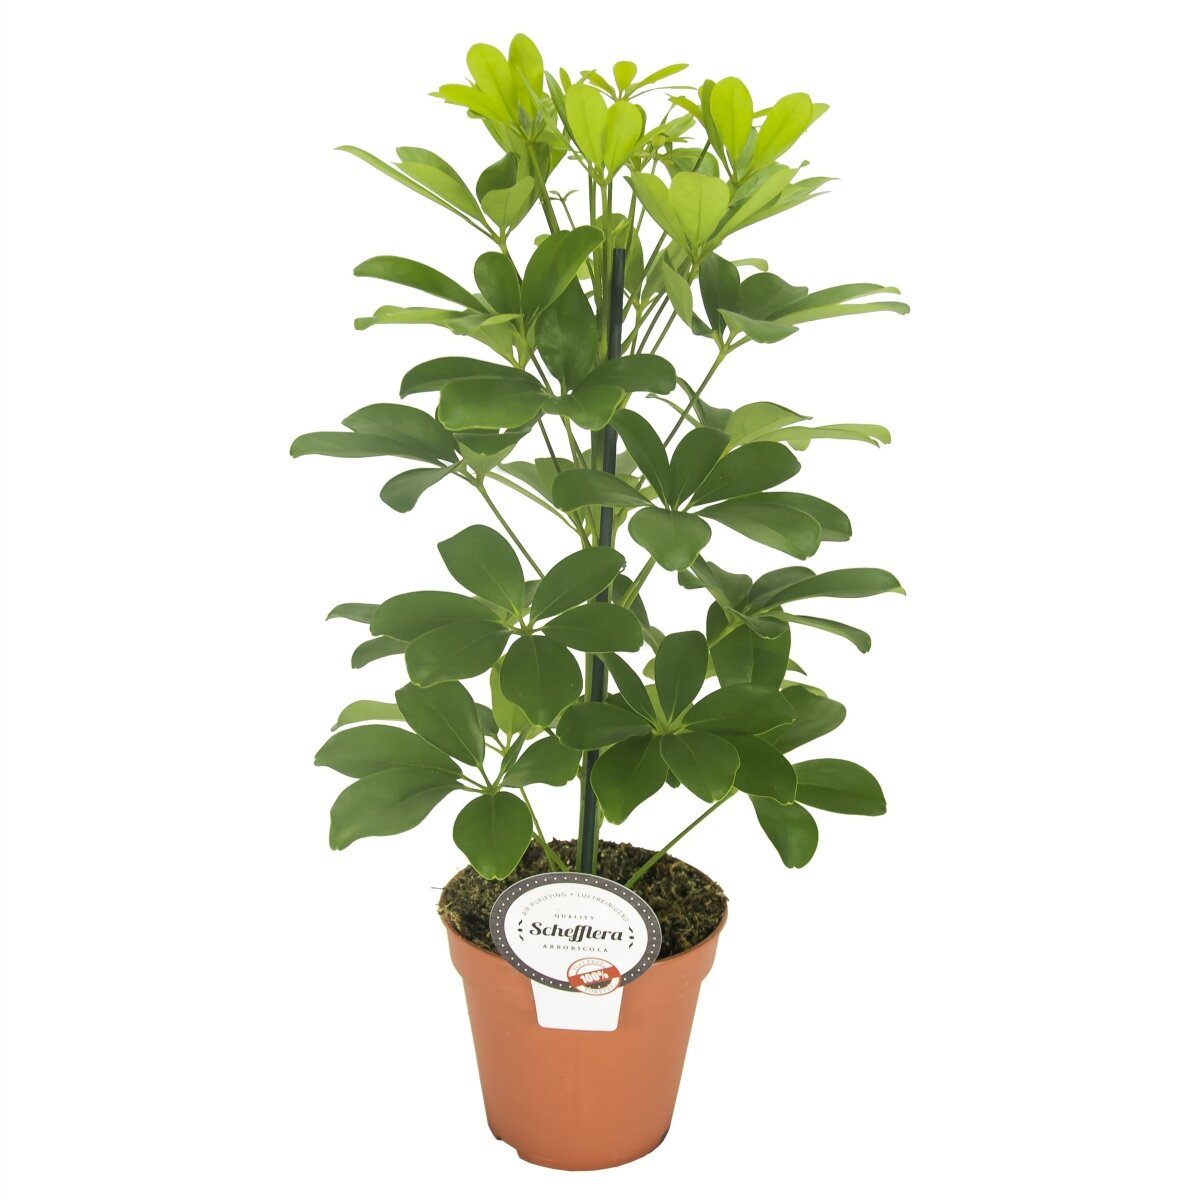 Strahlenaralie, (Schefflera arboricola), Sorte: Nora, im 13cm Topf, ca. 45cm hoch